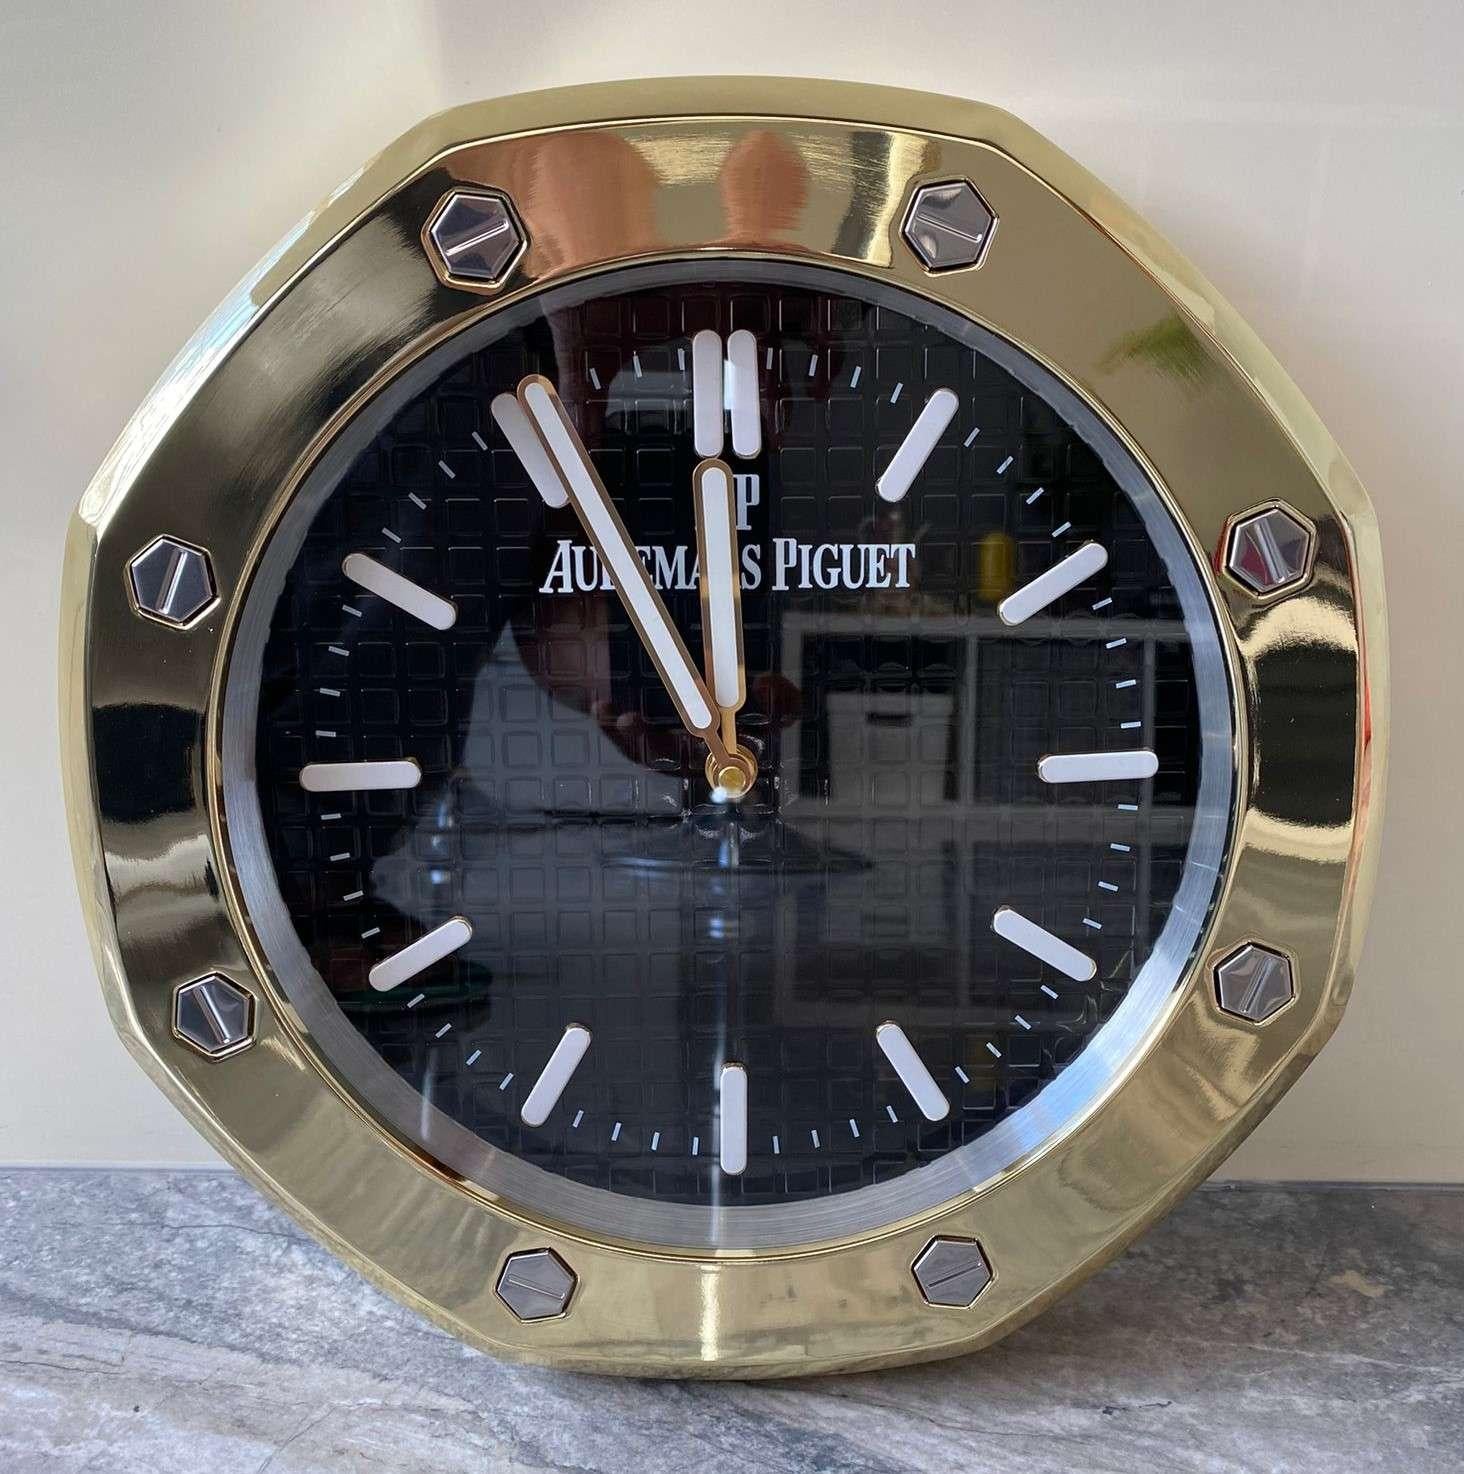 Audemars Piguet Officially Certified Chrome Gold Wall Clock. With luminous hands, sweeping hands.
Free international shipping.